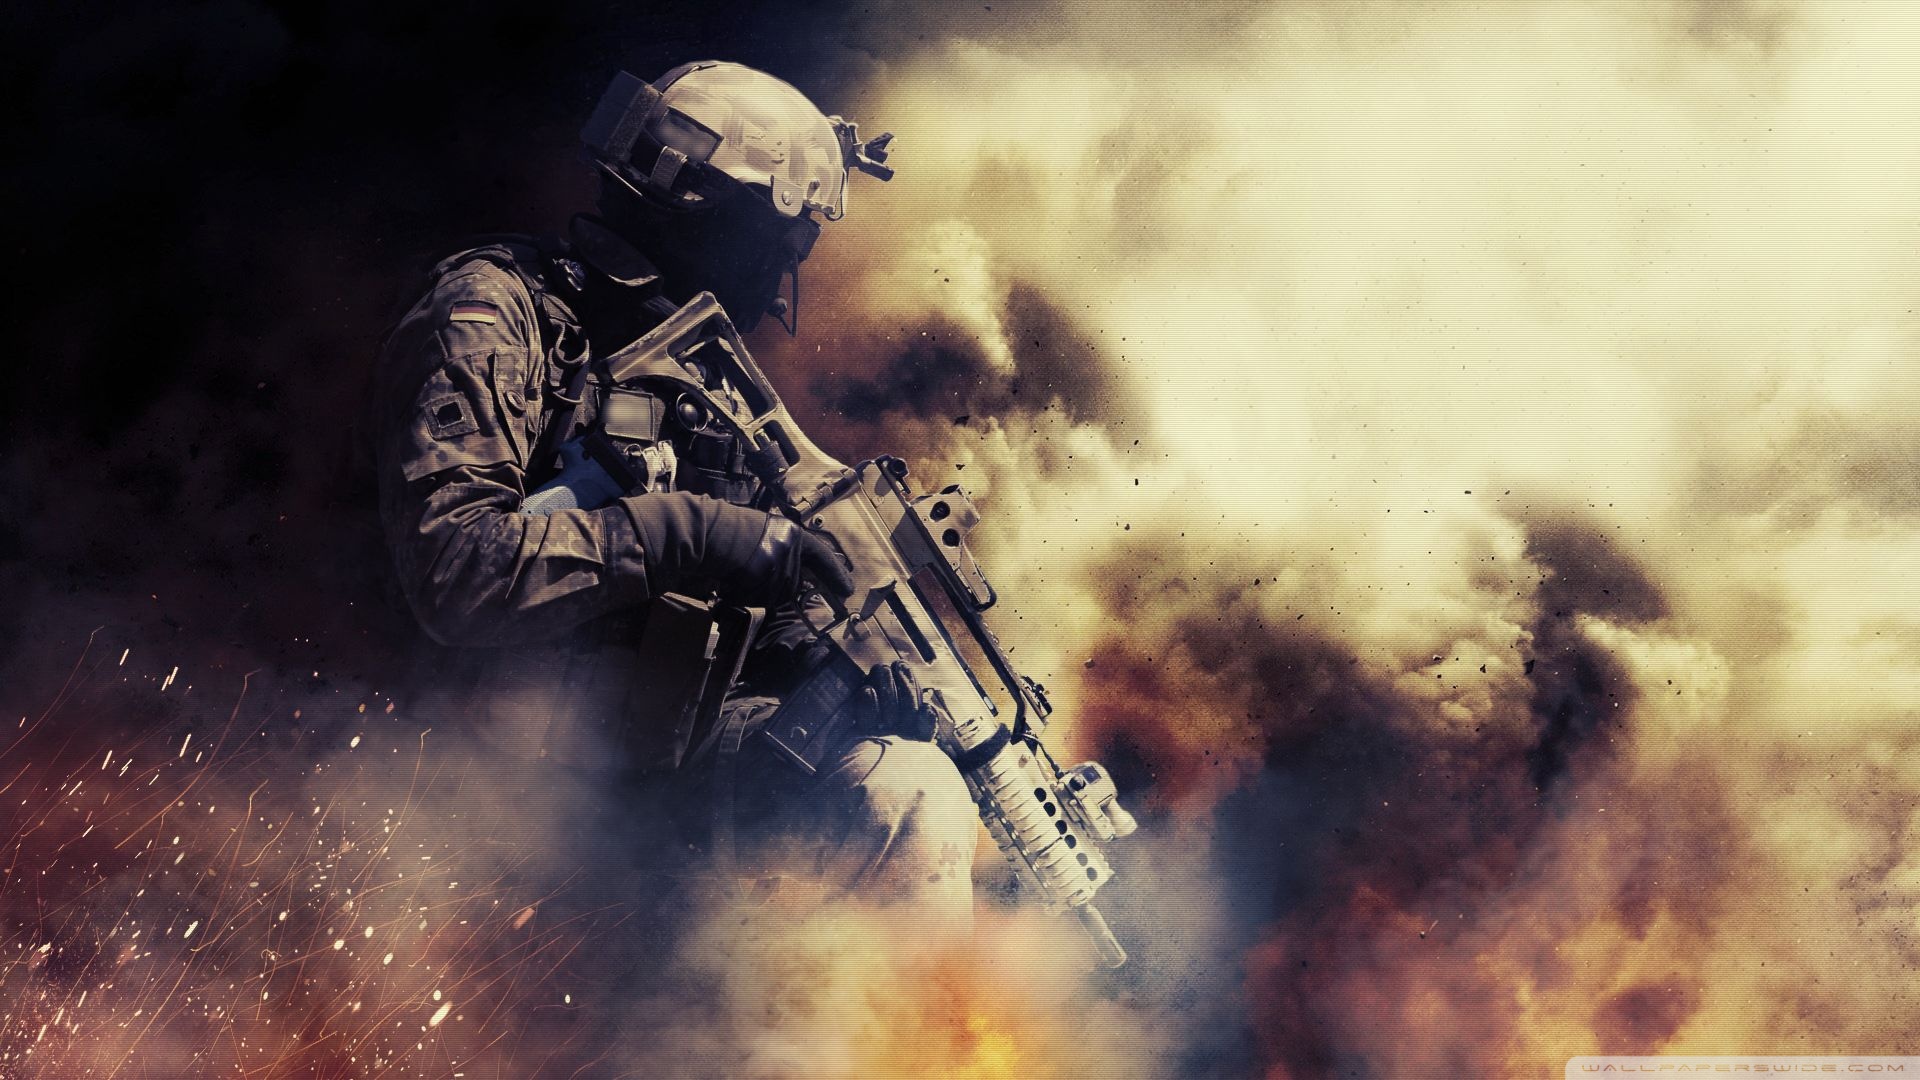 ksk wallpaper,smoke,soldier,event,military,firefighter